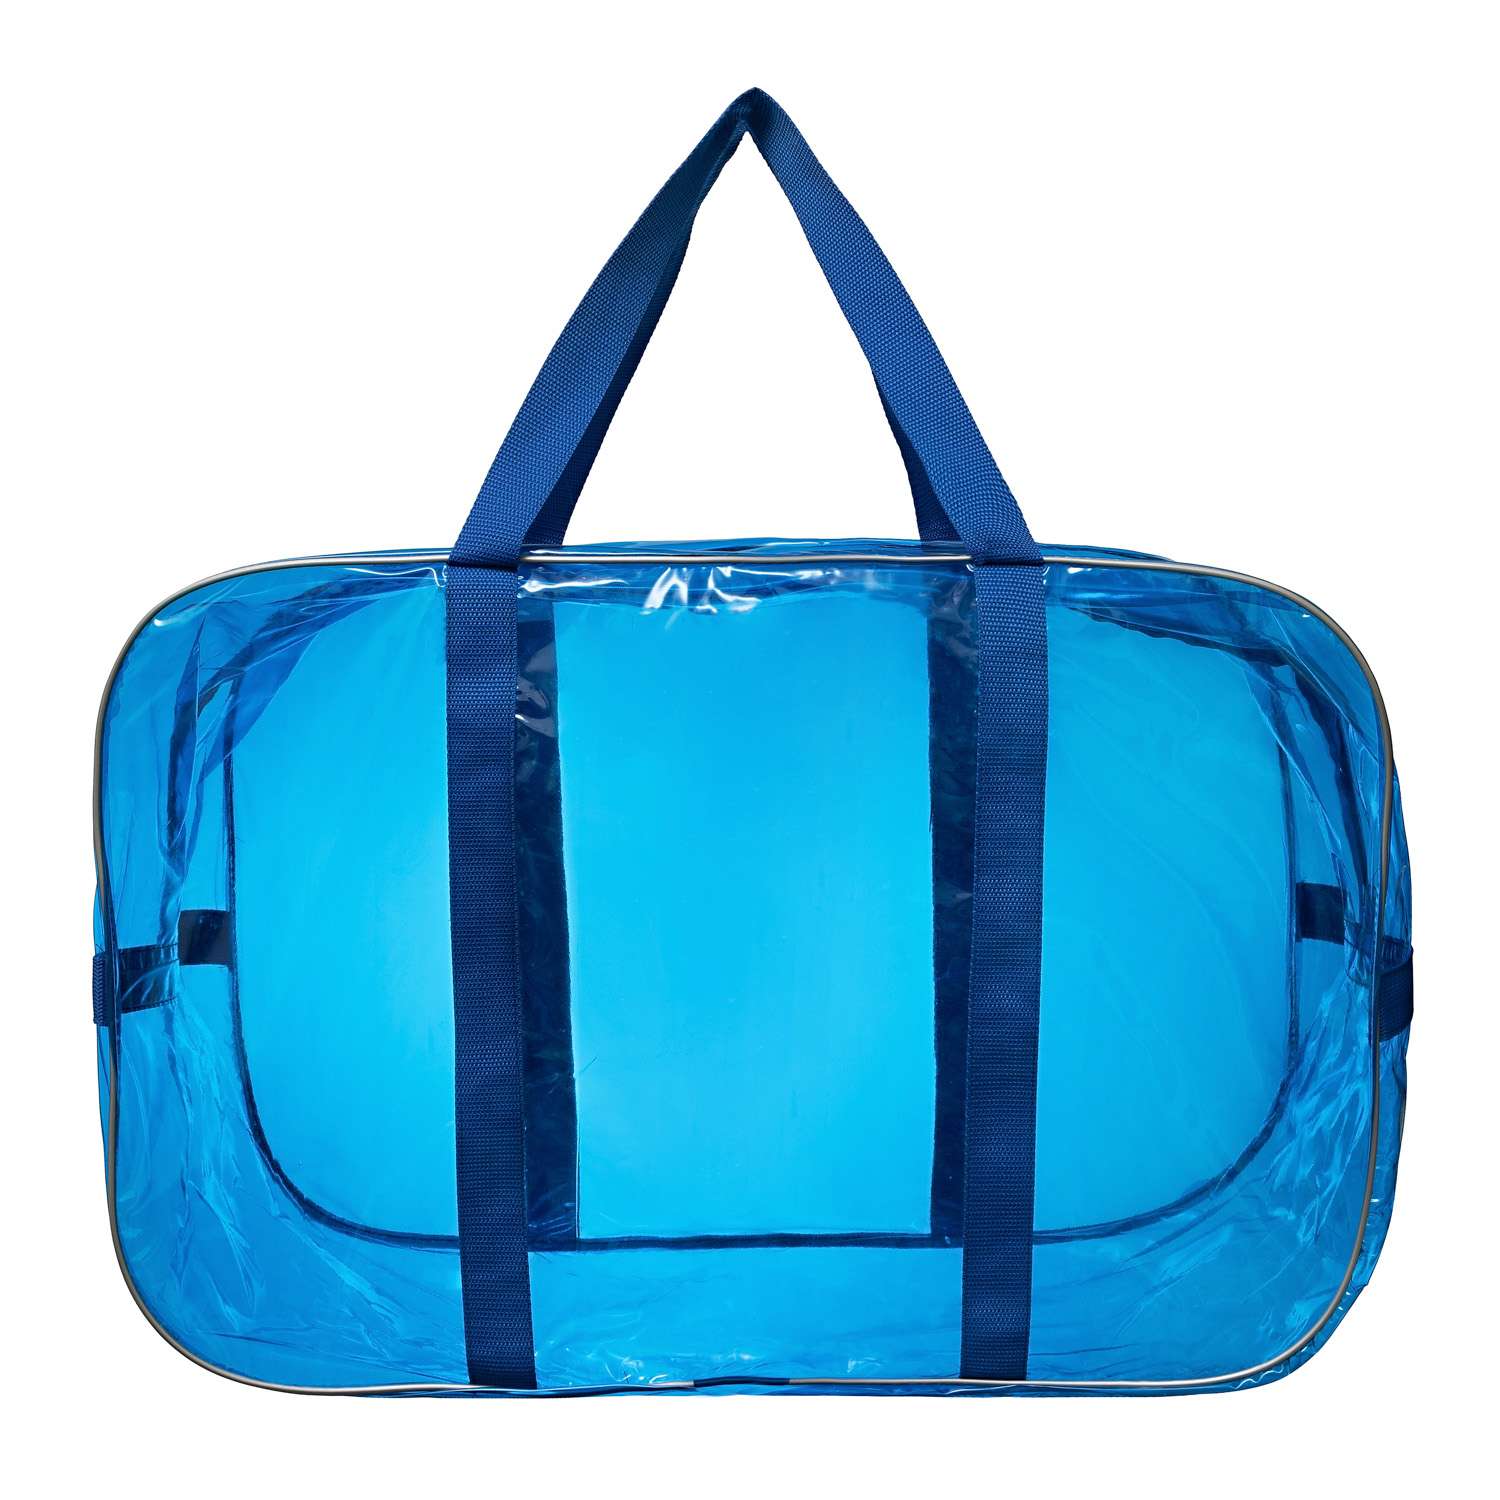 Сумка в роддом Эскимо Набор сумок в роддом синяя 2 ед - фото 2